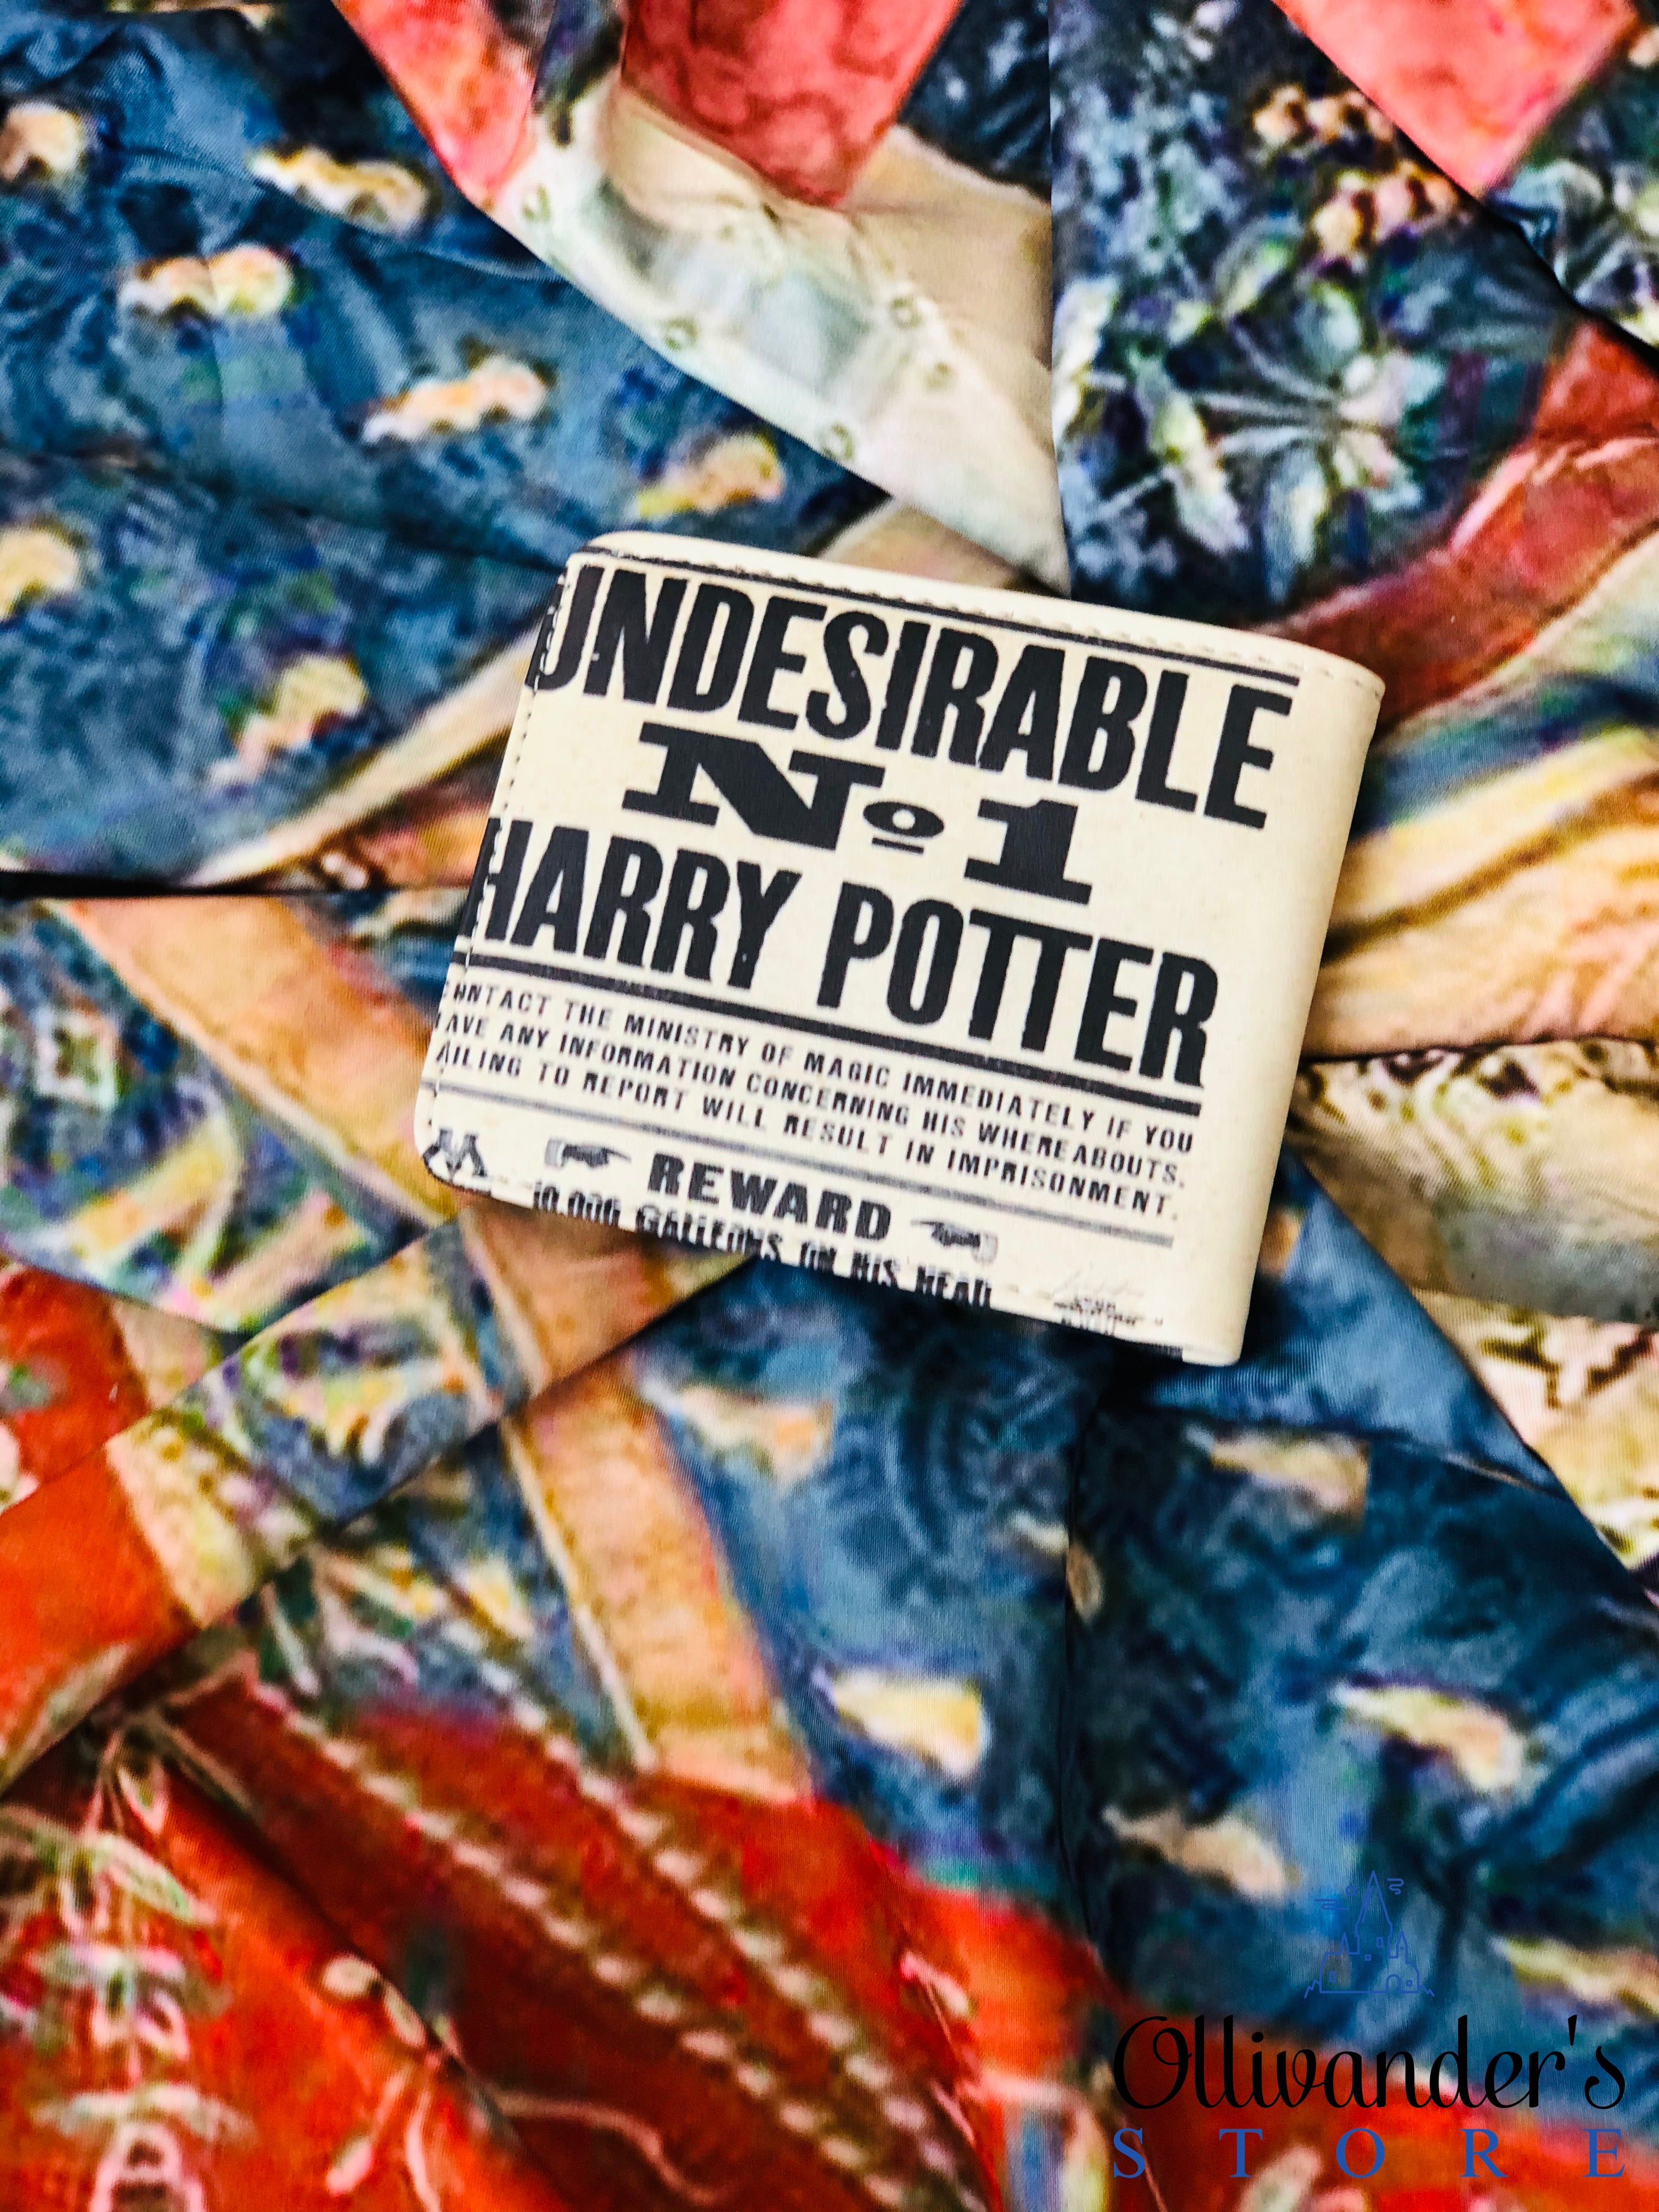 Harry Potter wallet